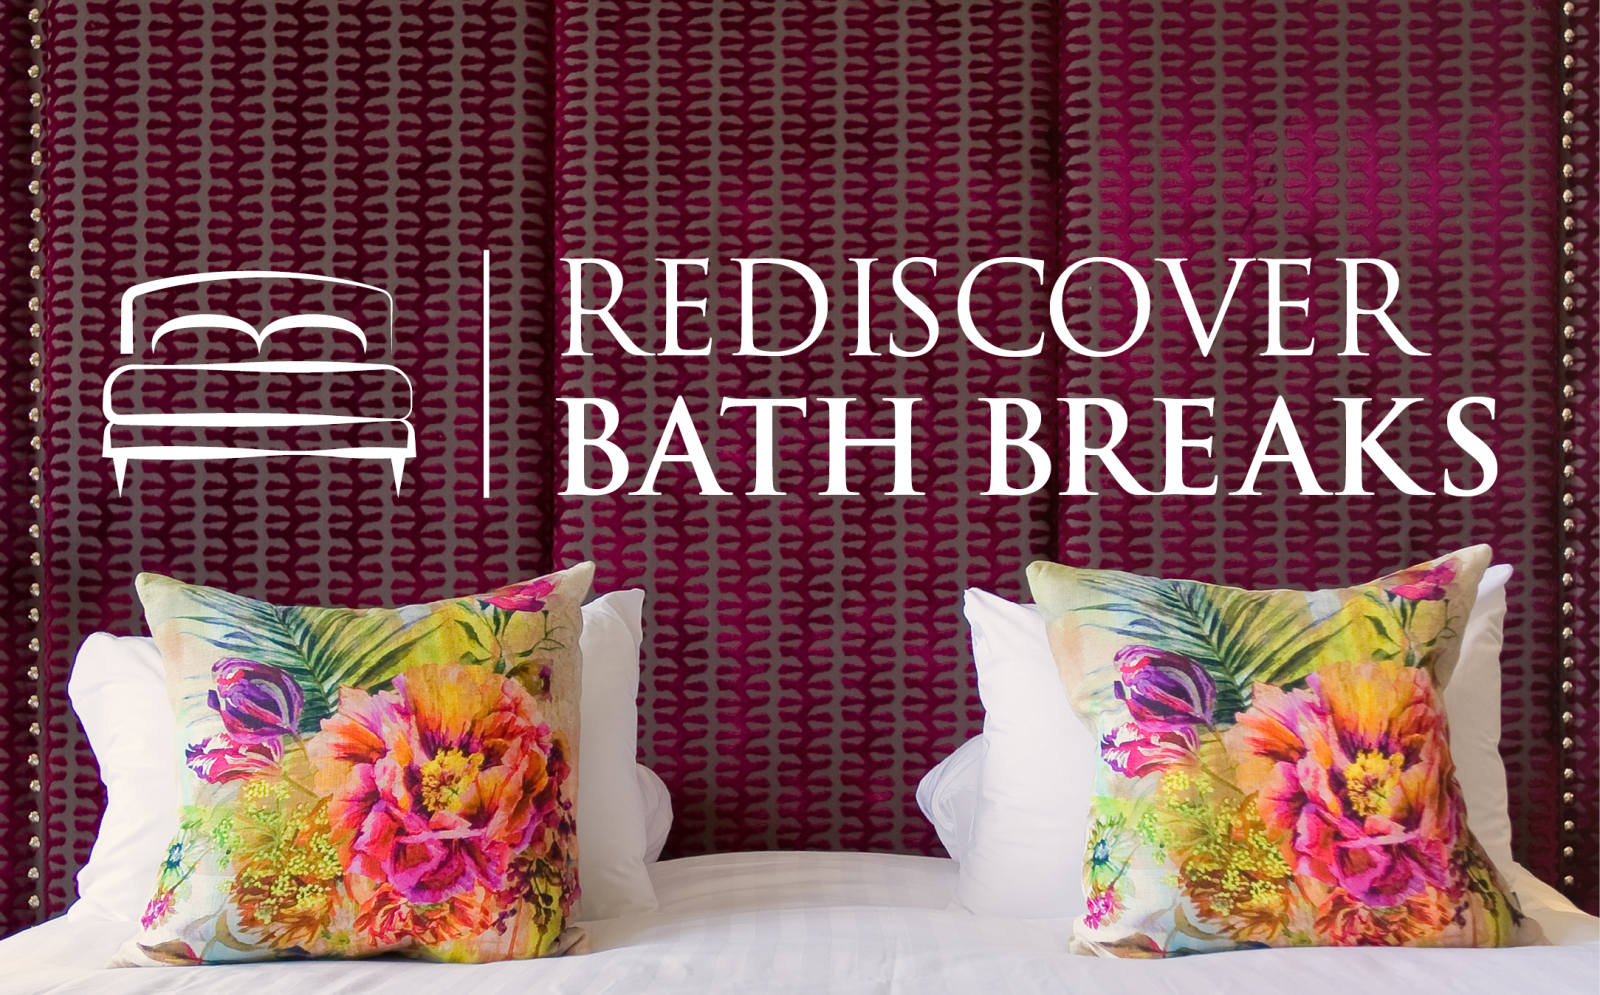 rediscover Bath breaks